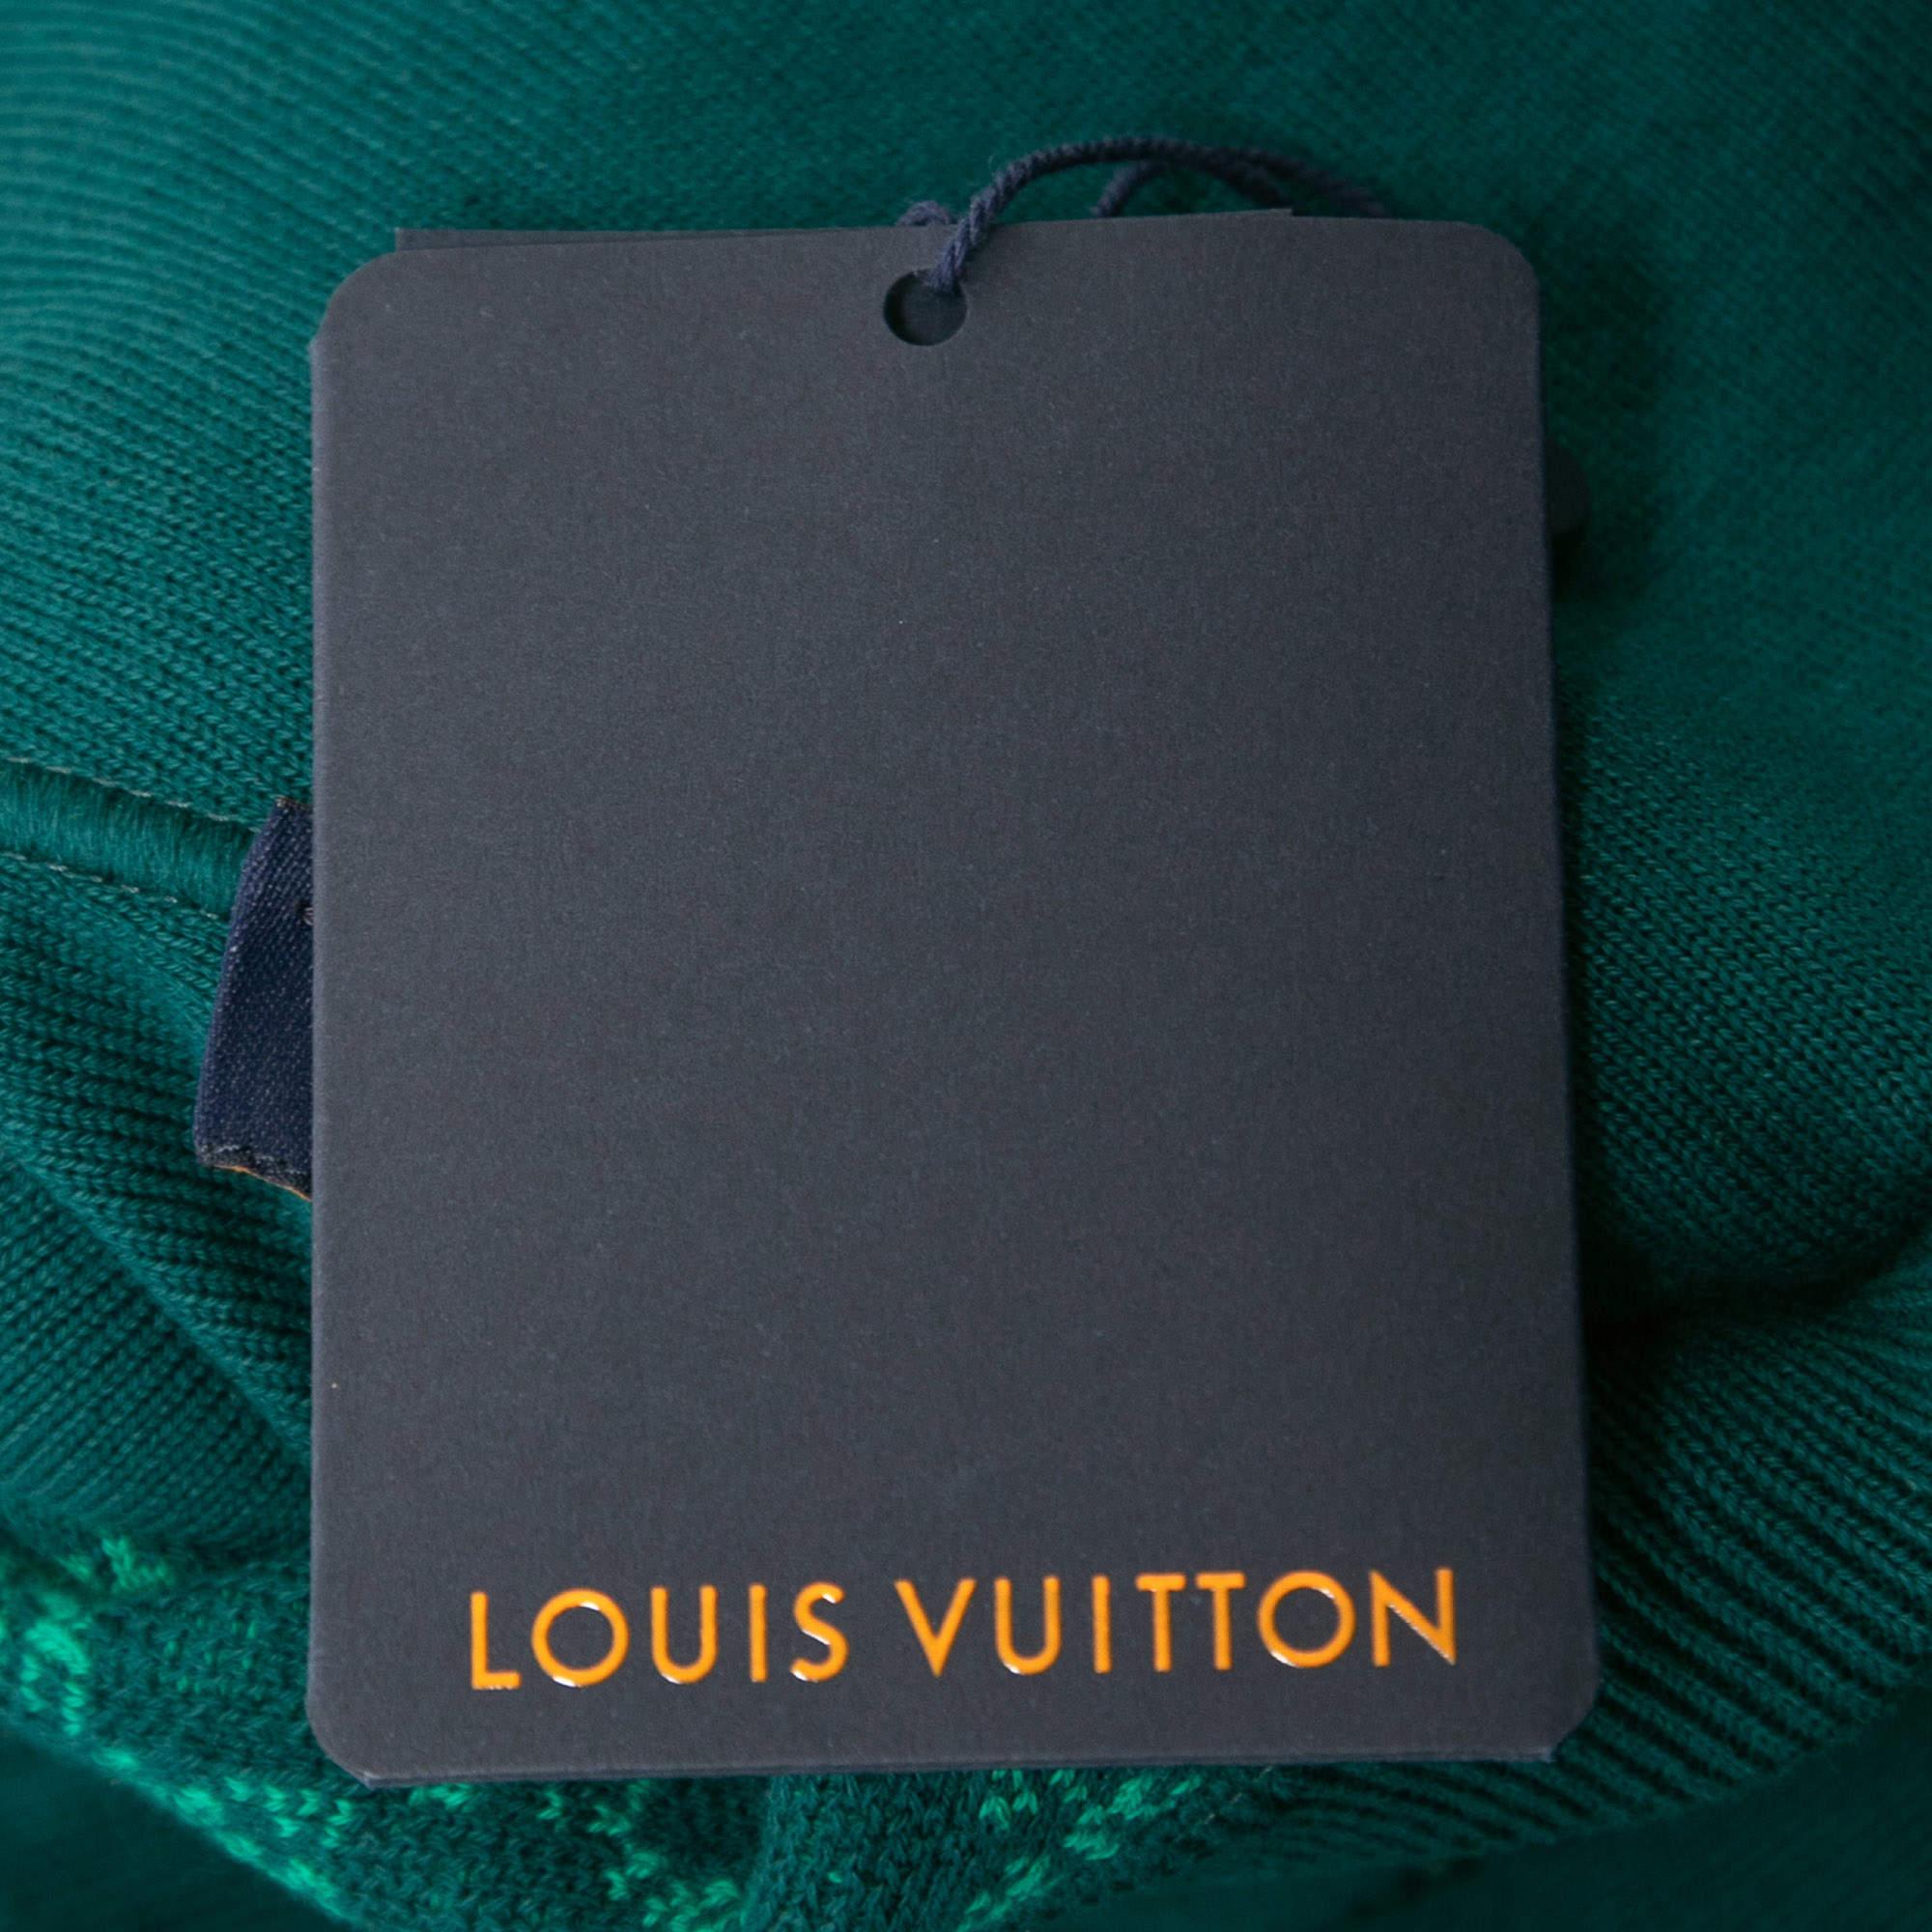 Louis Vuitton Mallard Blue Damier Pattern Cotton Knit Reversible Track Top M 1